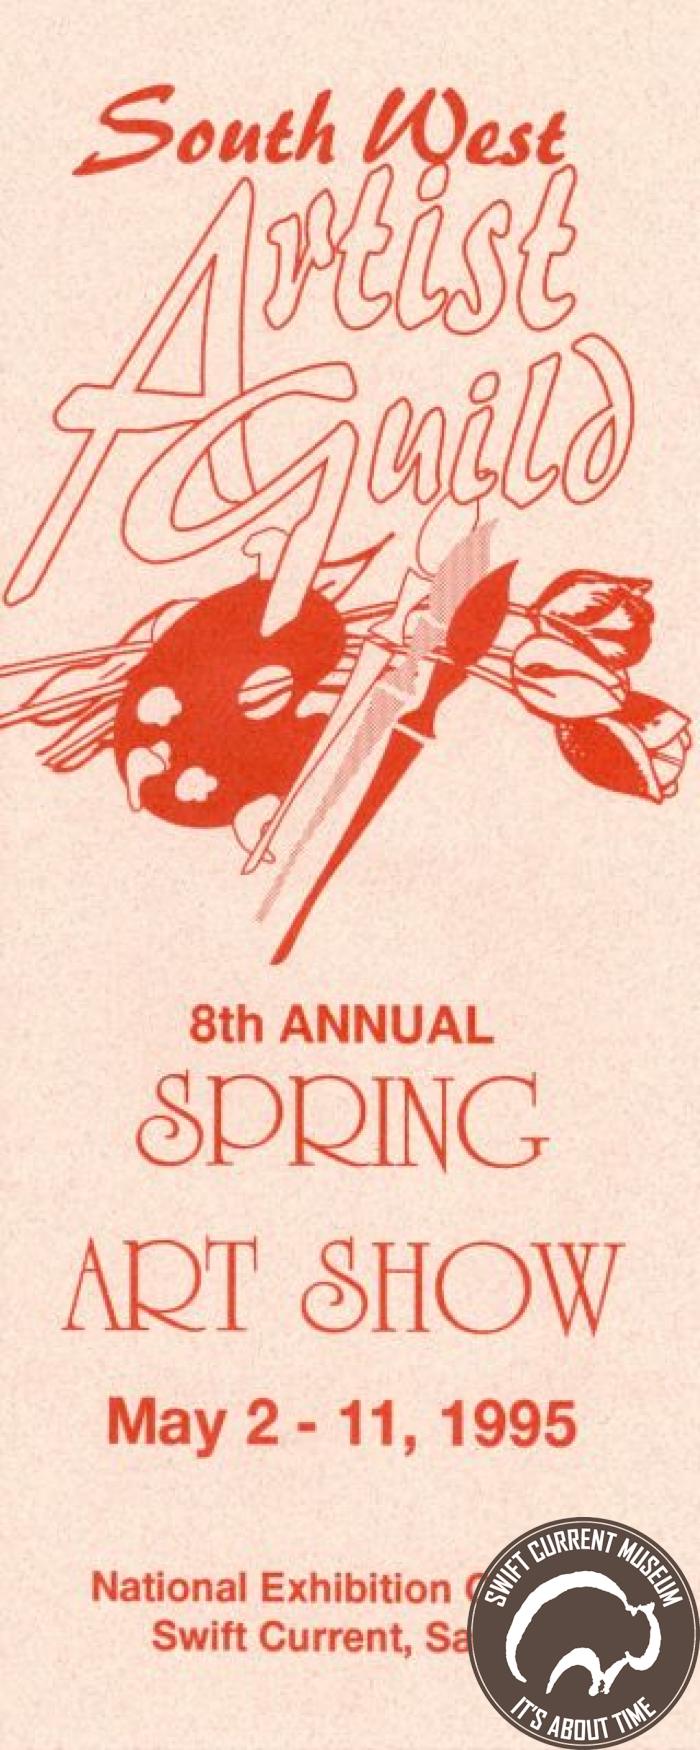 South West Artist Guild Catalogue - Spring Art Show (1995-05-02)